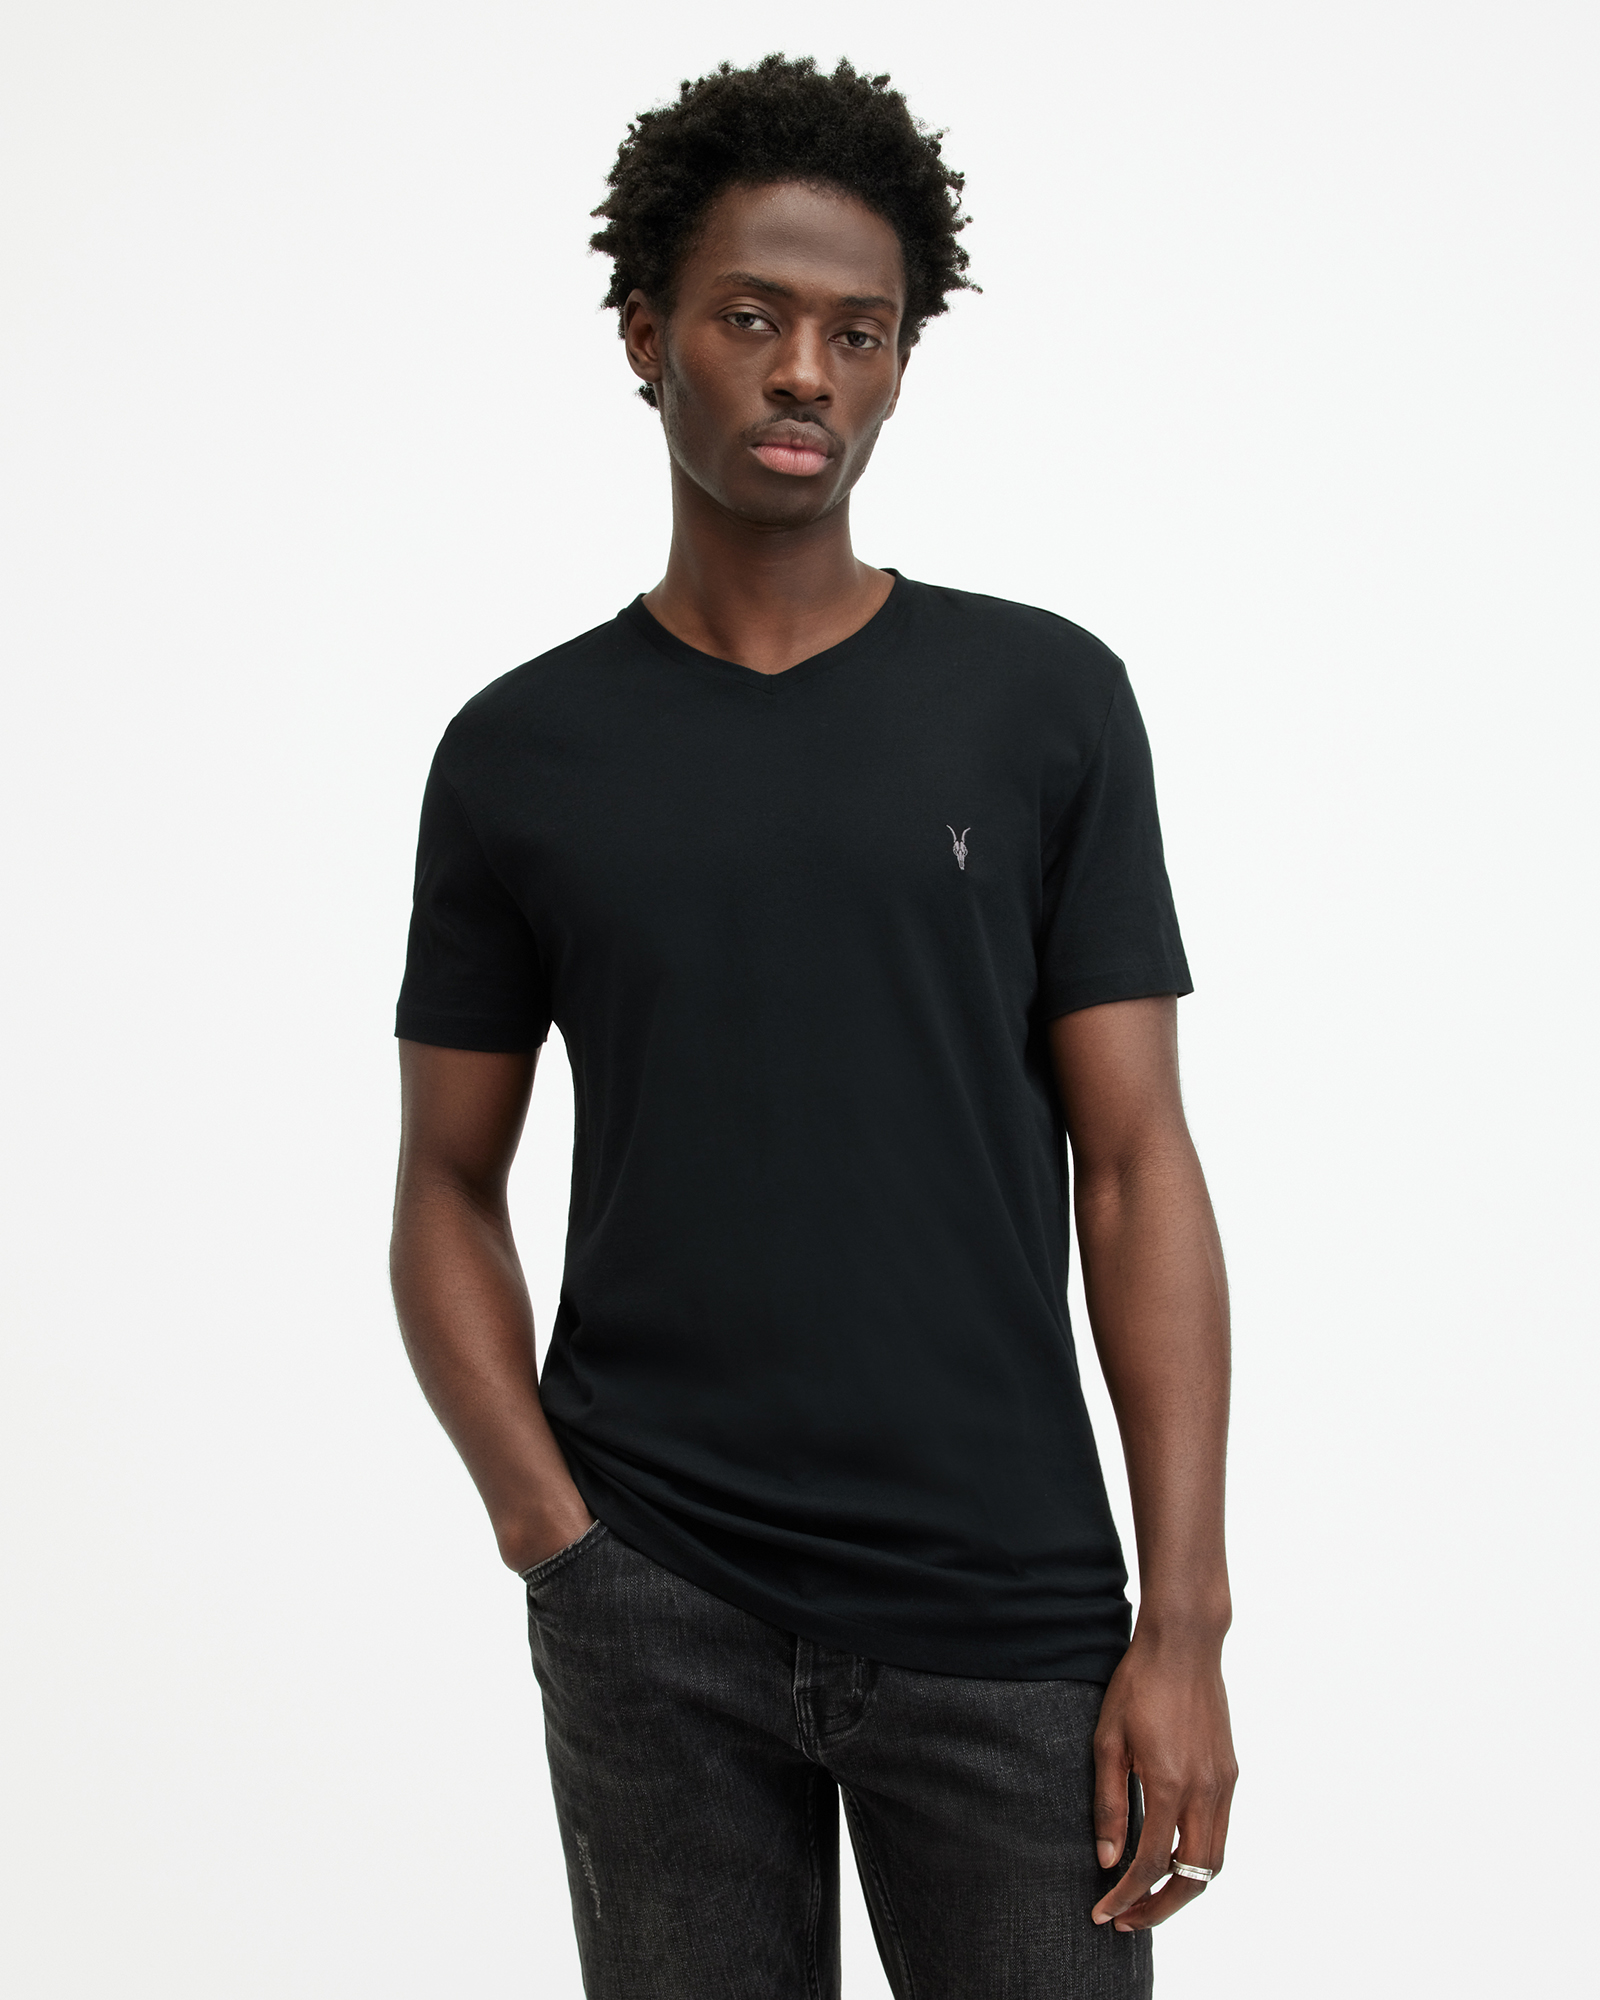 AllSaints Tonic V-Neck Slim Fit Ramskull T-Shirt,, Size: